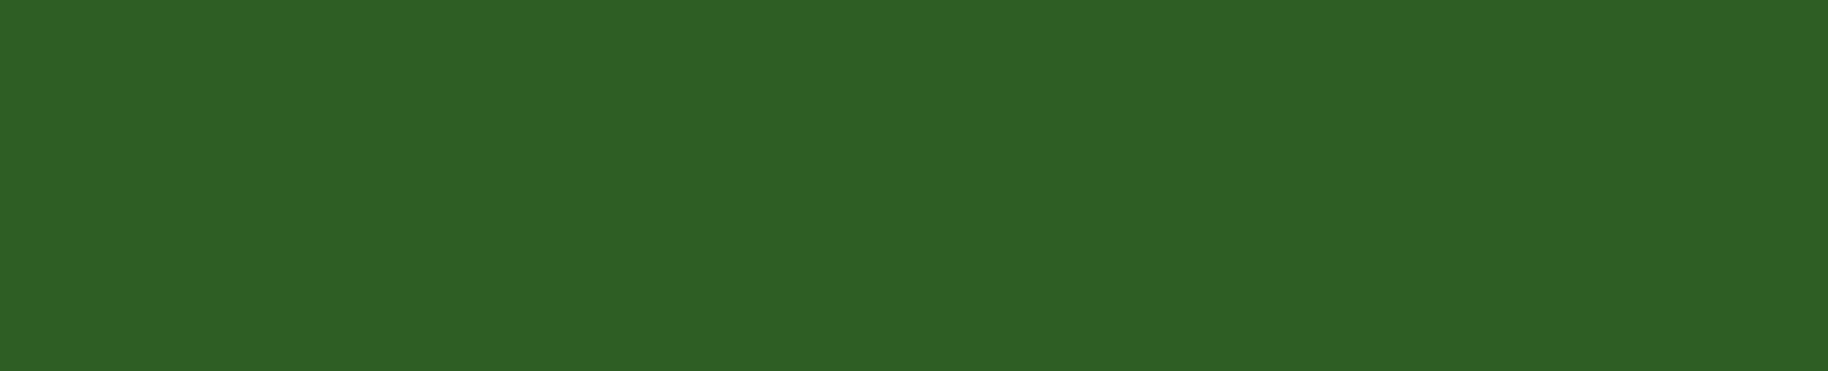 brackground-color green